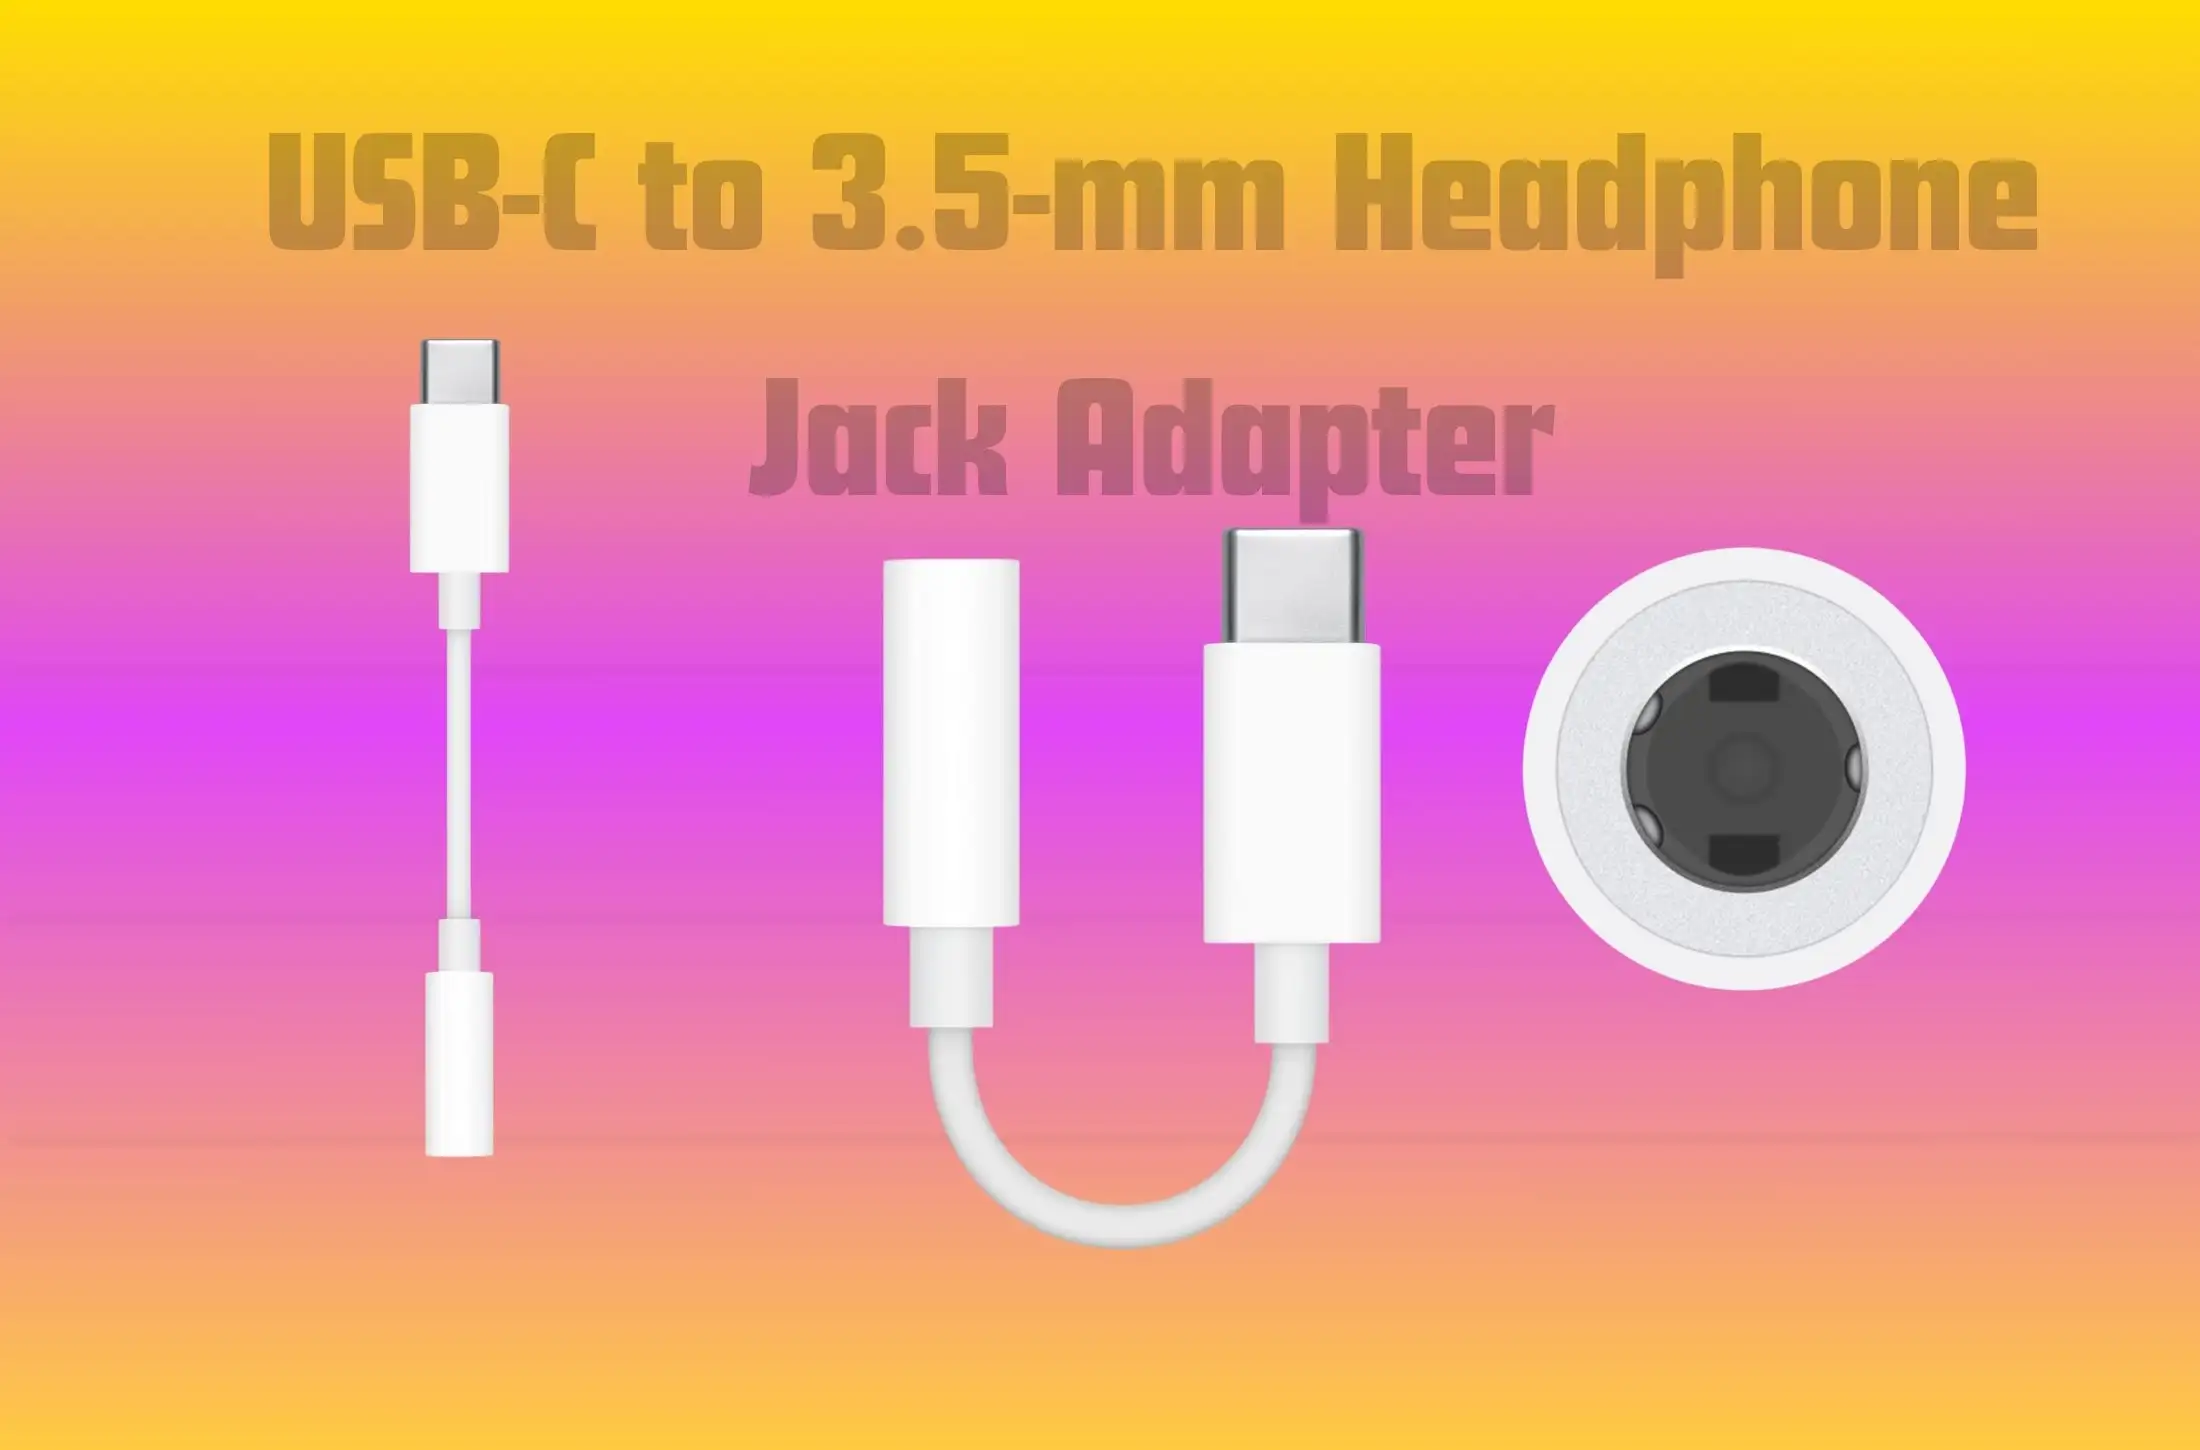 USB-C to 3.5-mm Headphone Jack Adapter